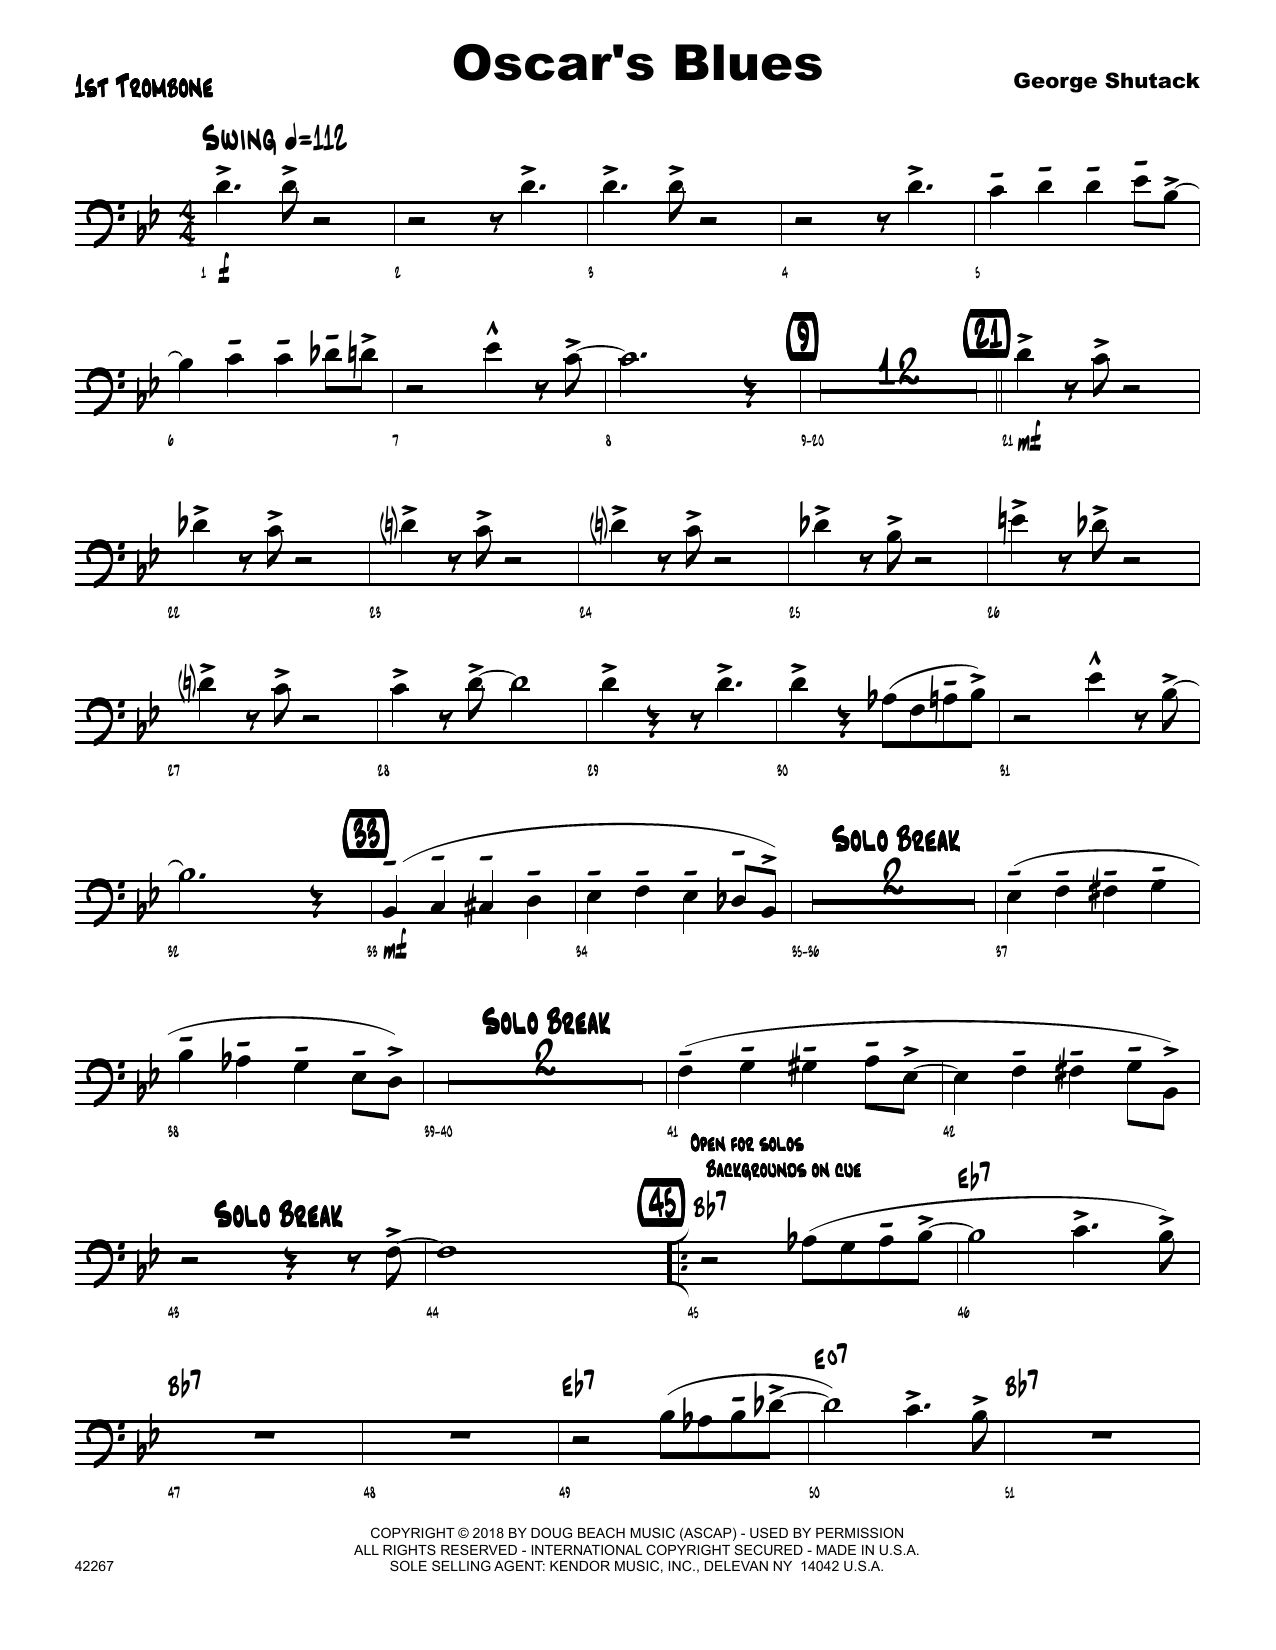 Download George Shutack Oscar's Blues - 1st Trombone Sheet Music